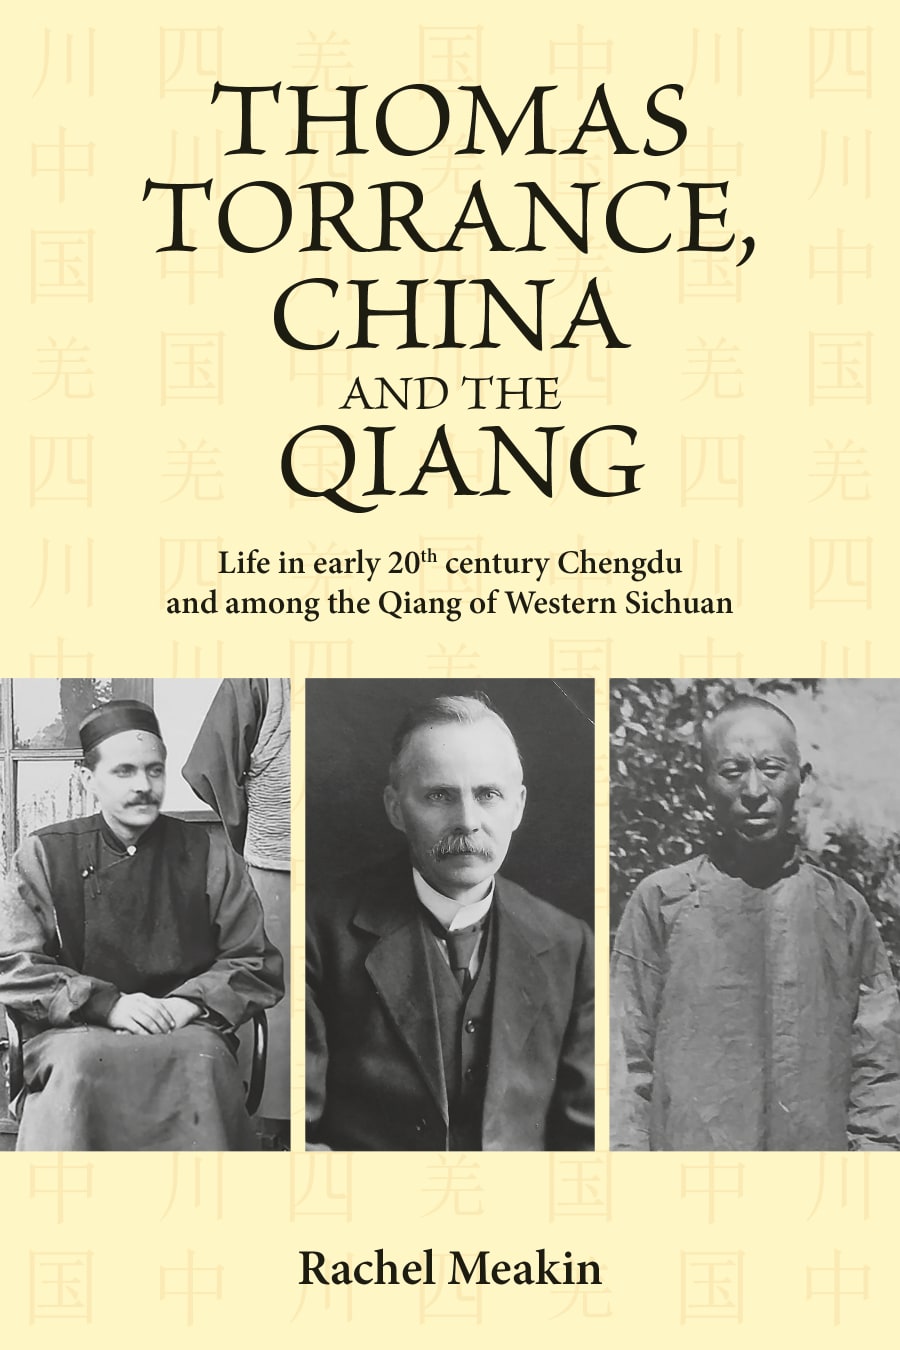 THOMAS TORRANCE, CHINA AND THE QIANG